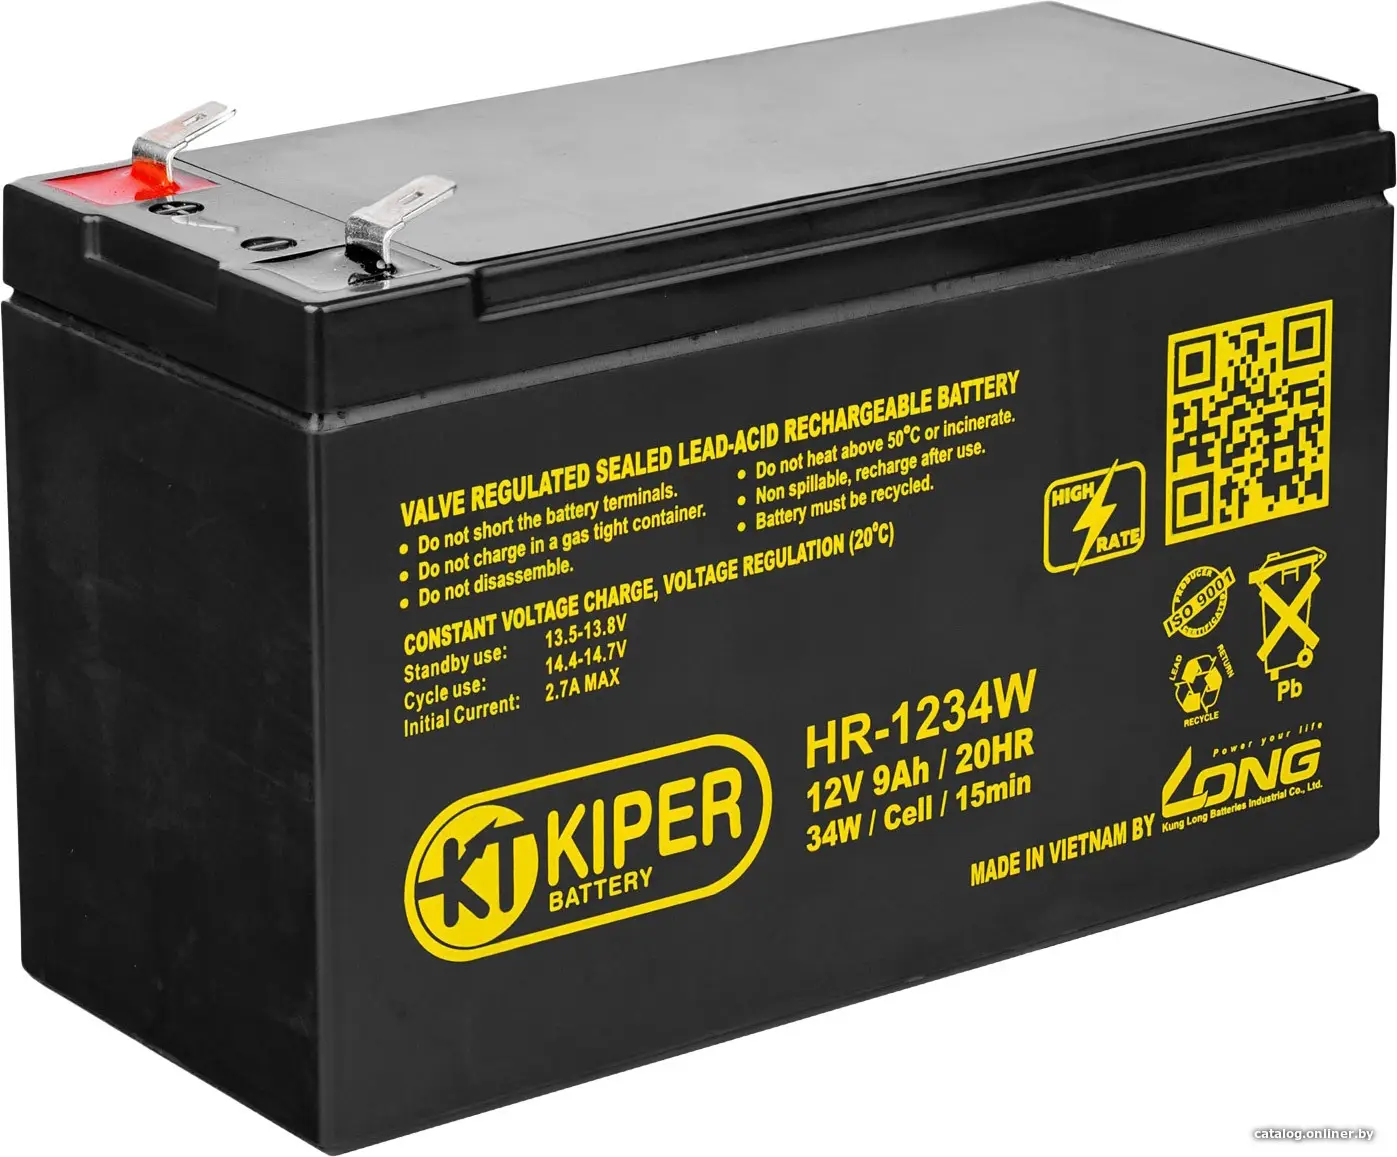 Купить Аккумуляторная батарея Kiper HR-1234W F2 12V/9Ah, цена, опт и розница